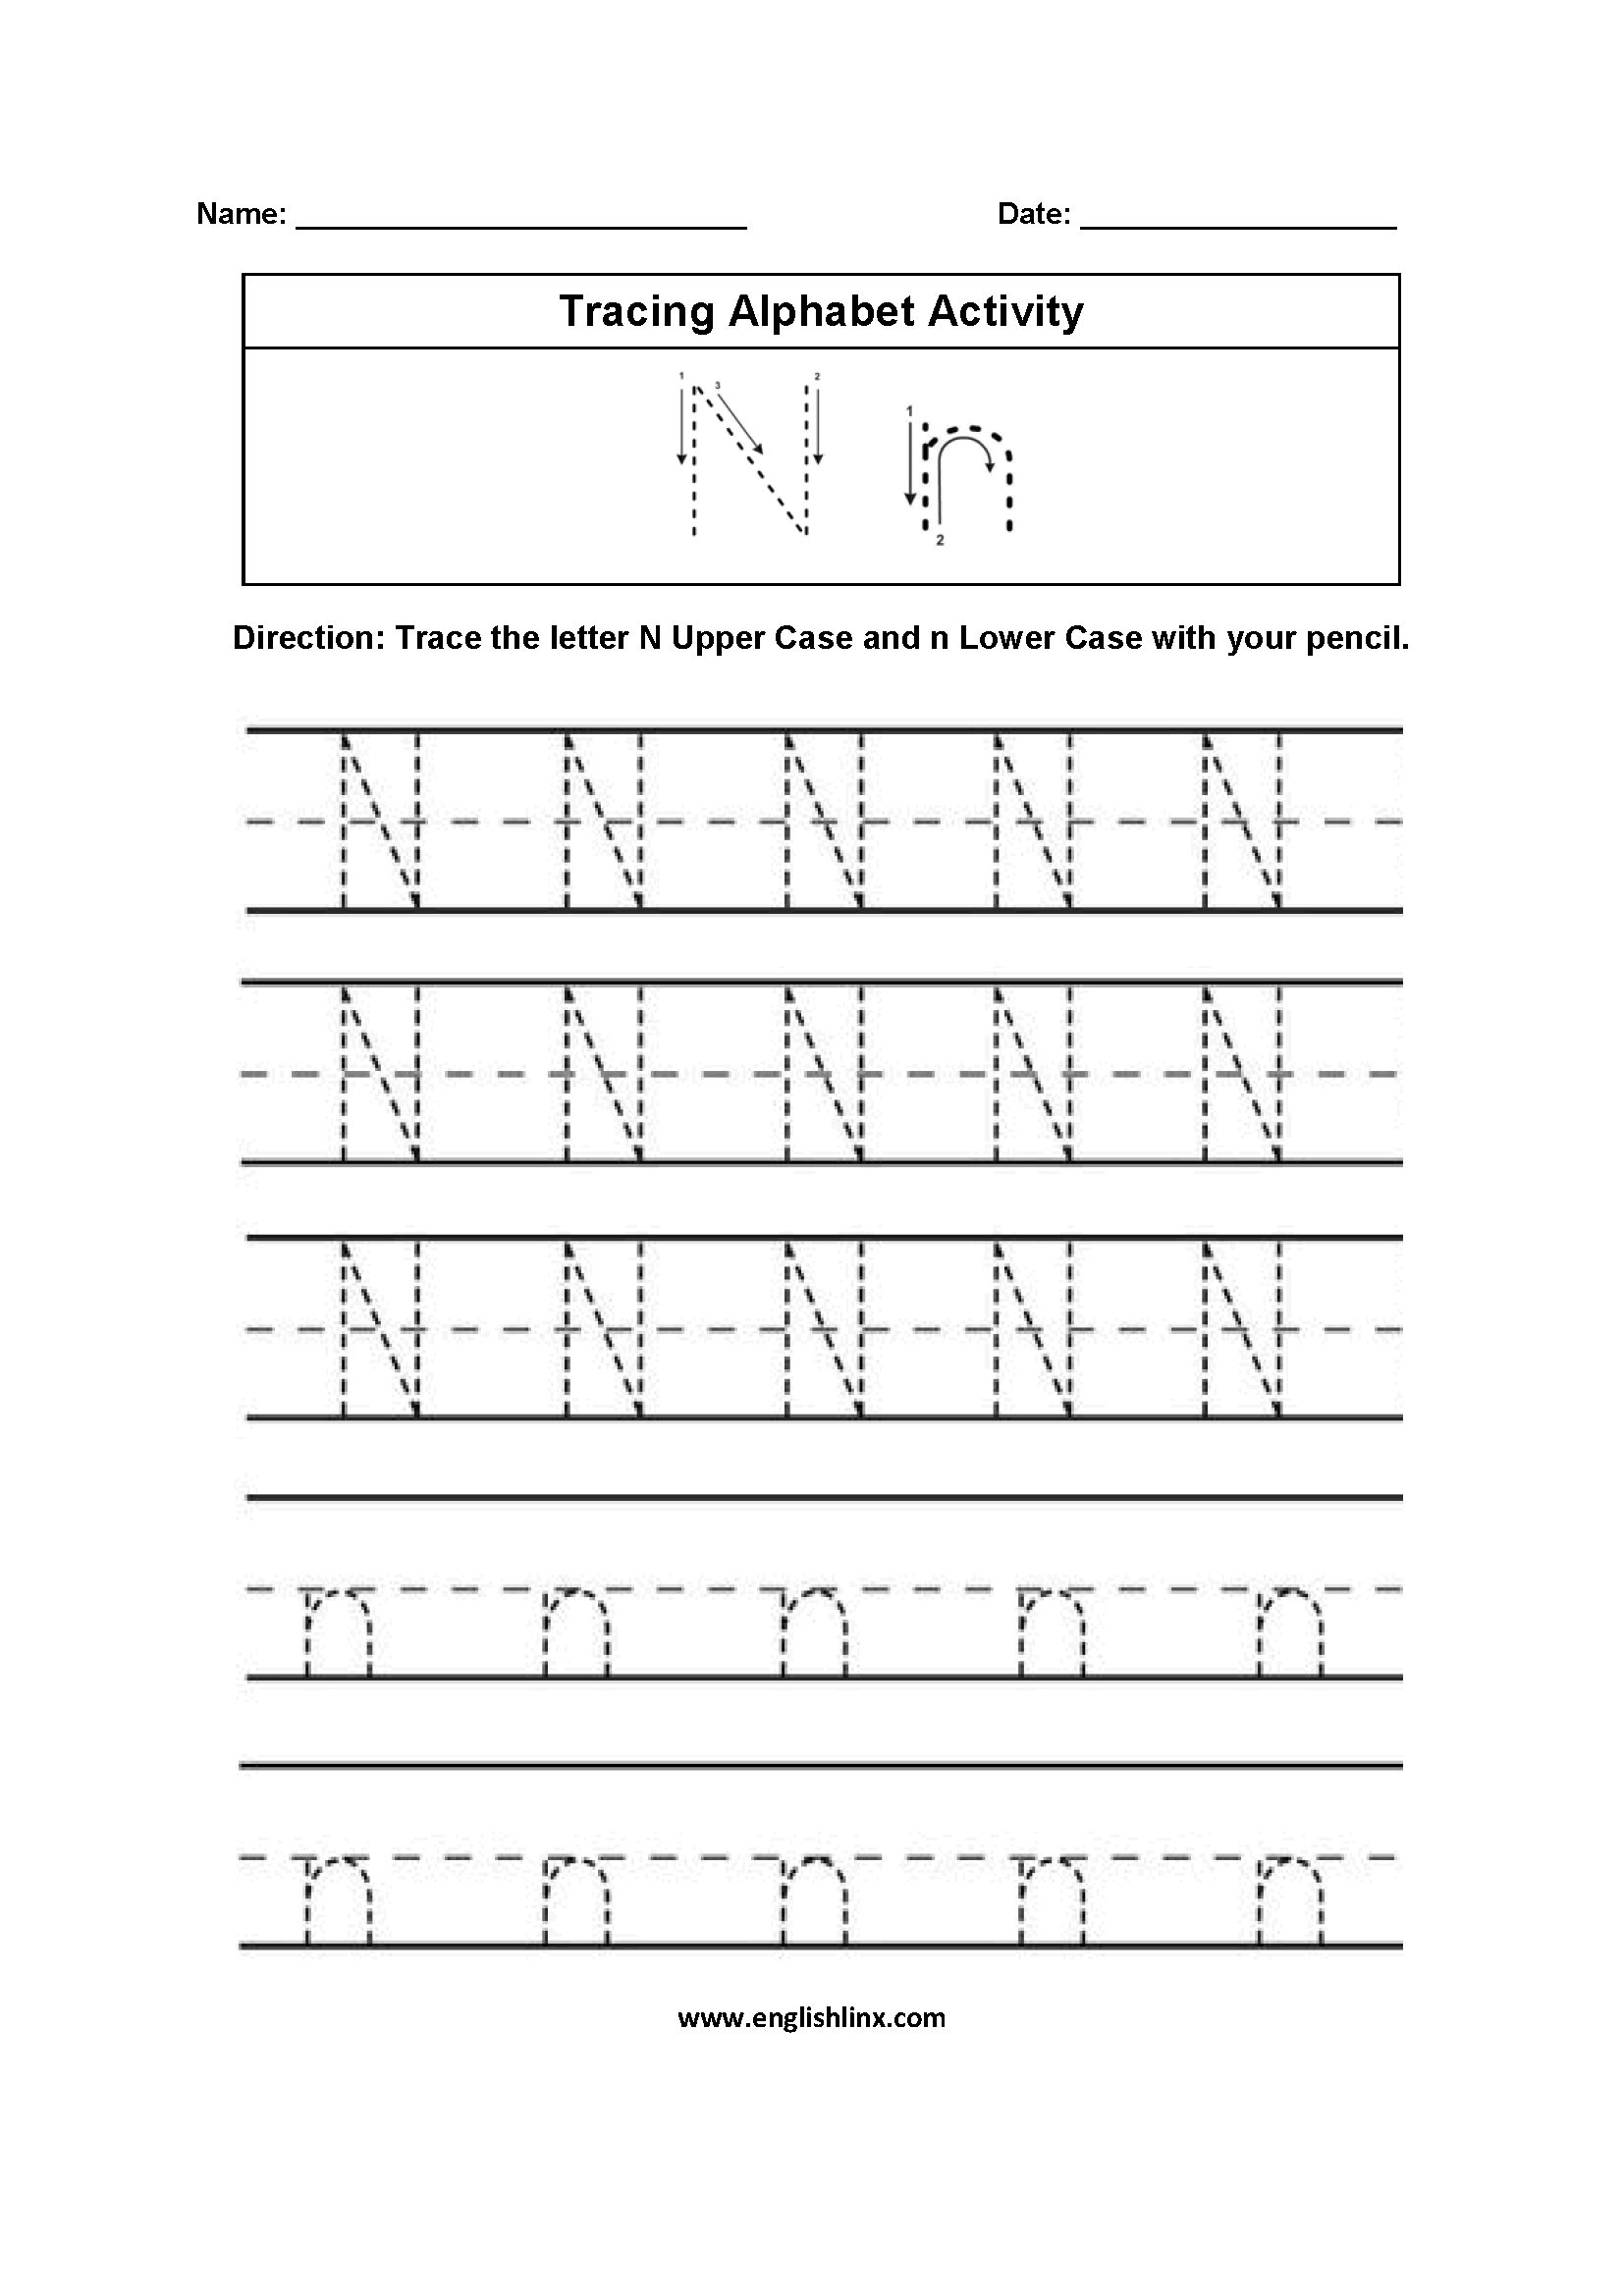 Alphabet Worksheets | Tracing Alphabet Worksheets within Tracing The Letters Of The Alphabet Worksheets